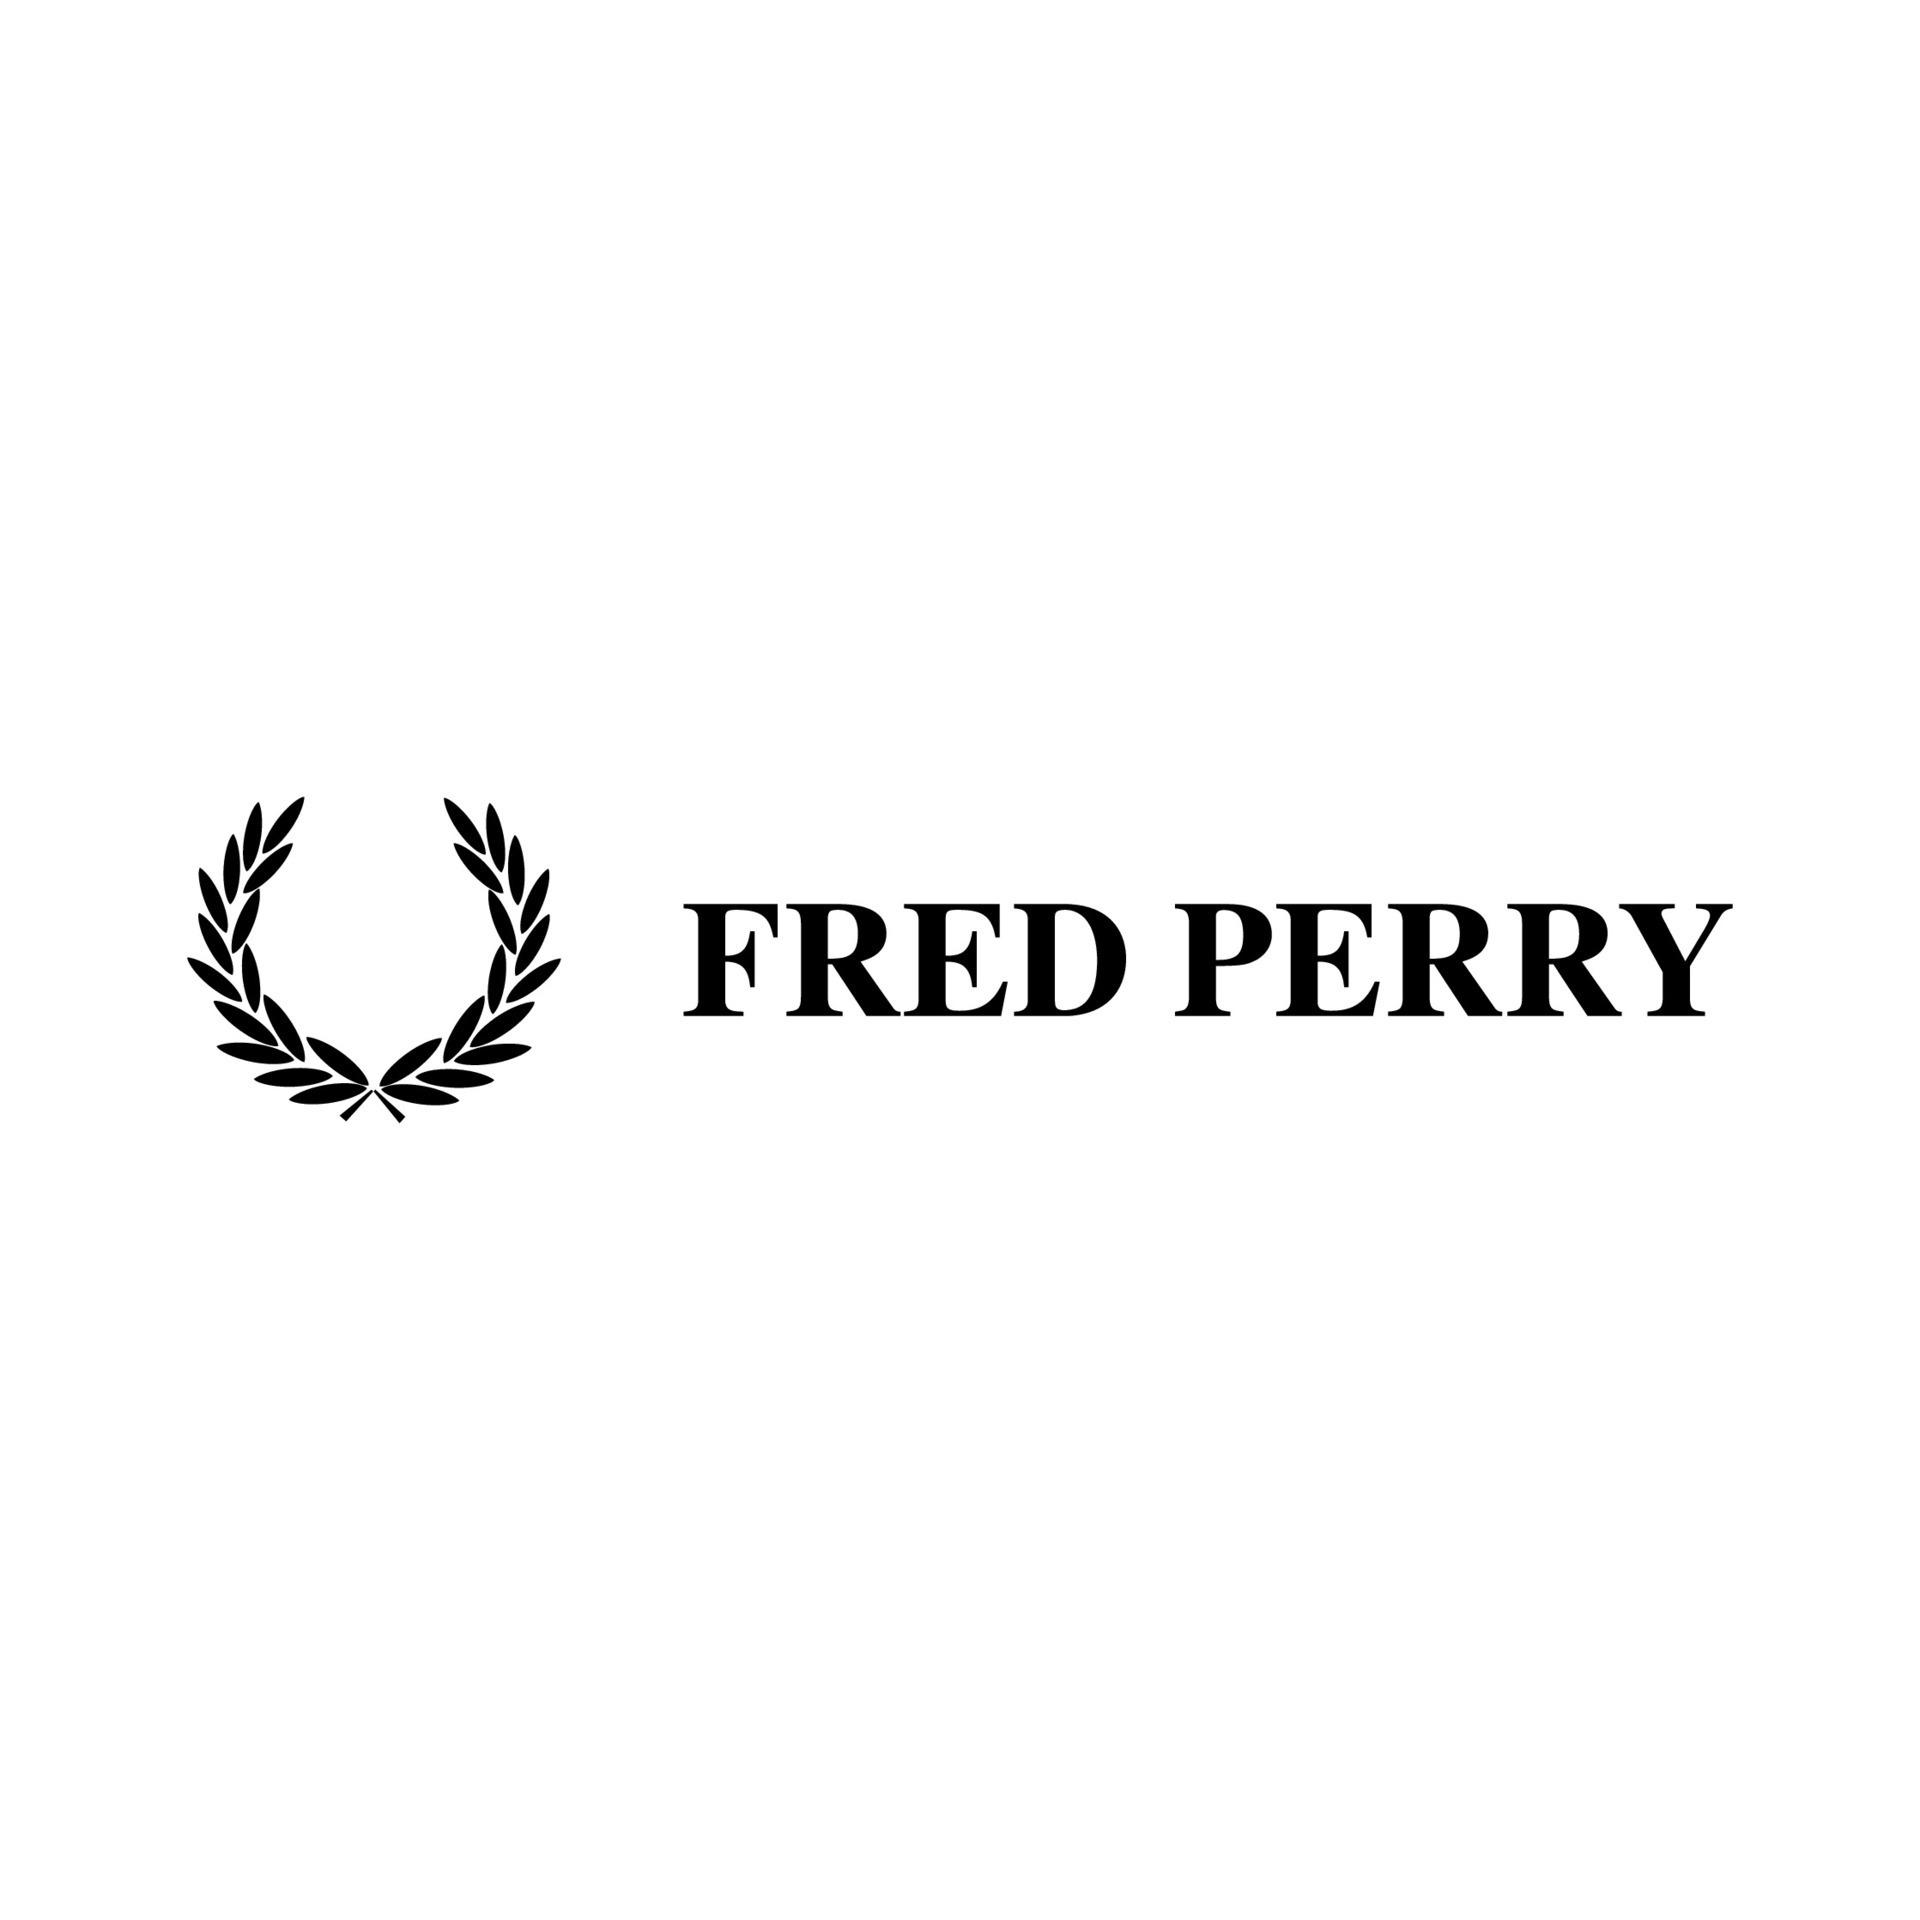 Fred perry logo editorial vector 26555509 Vector Art at Vecteezy